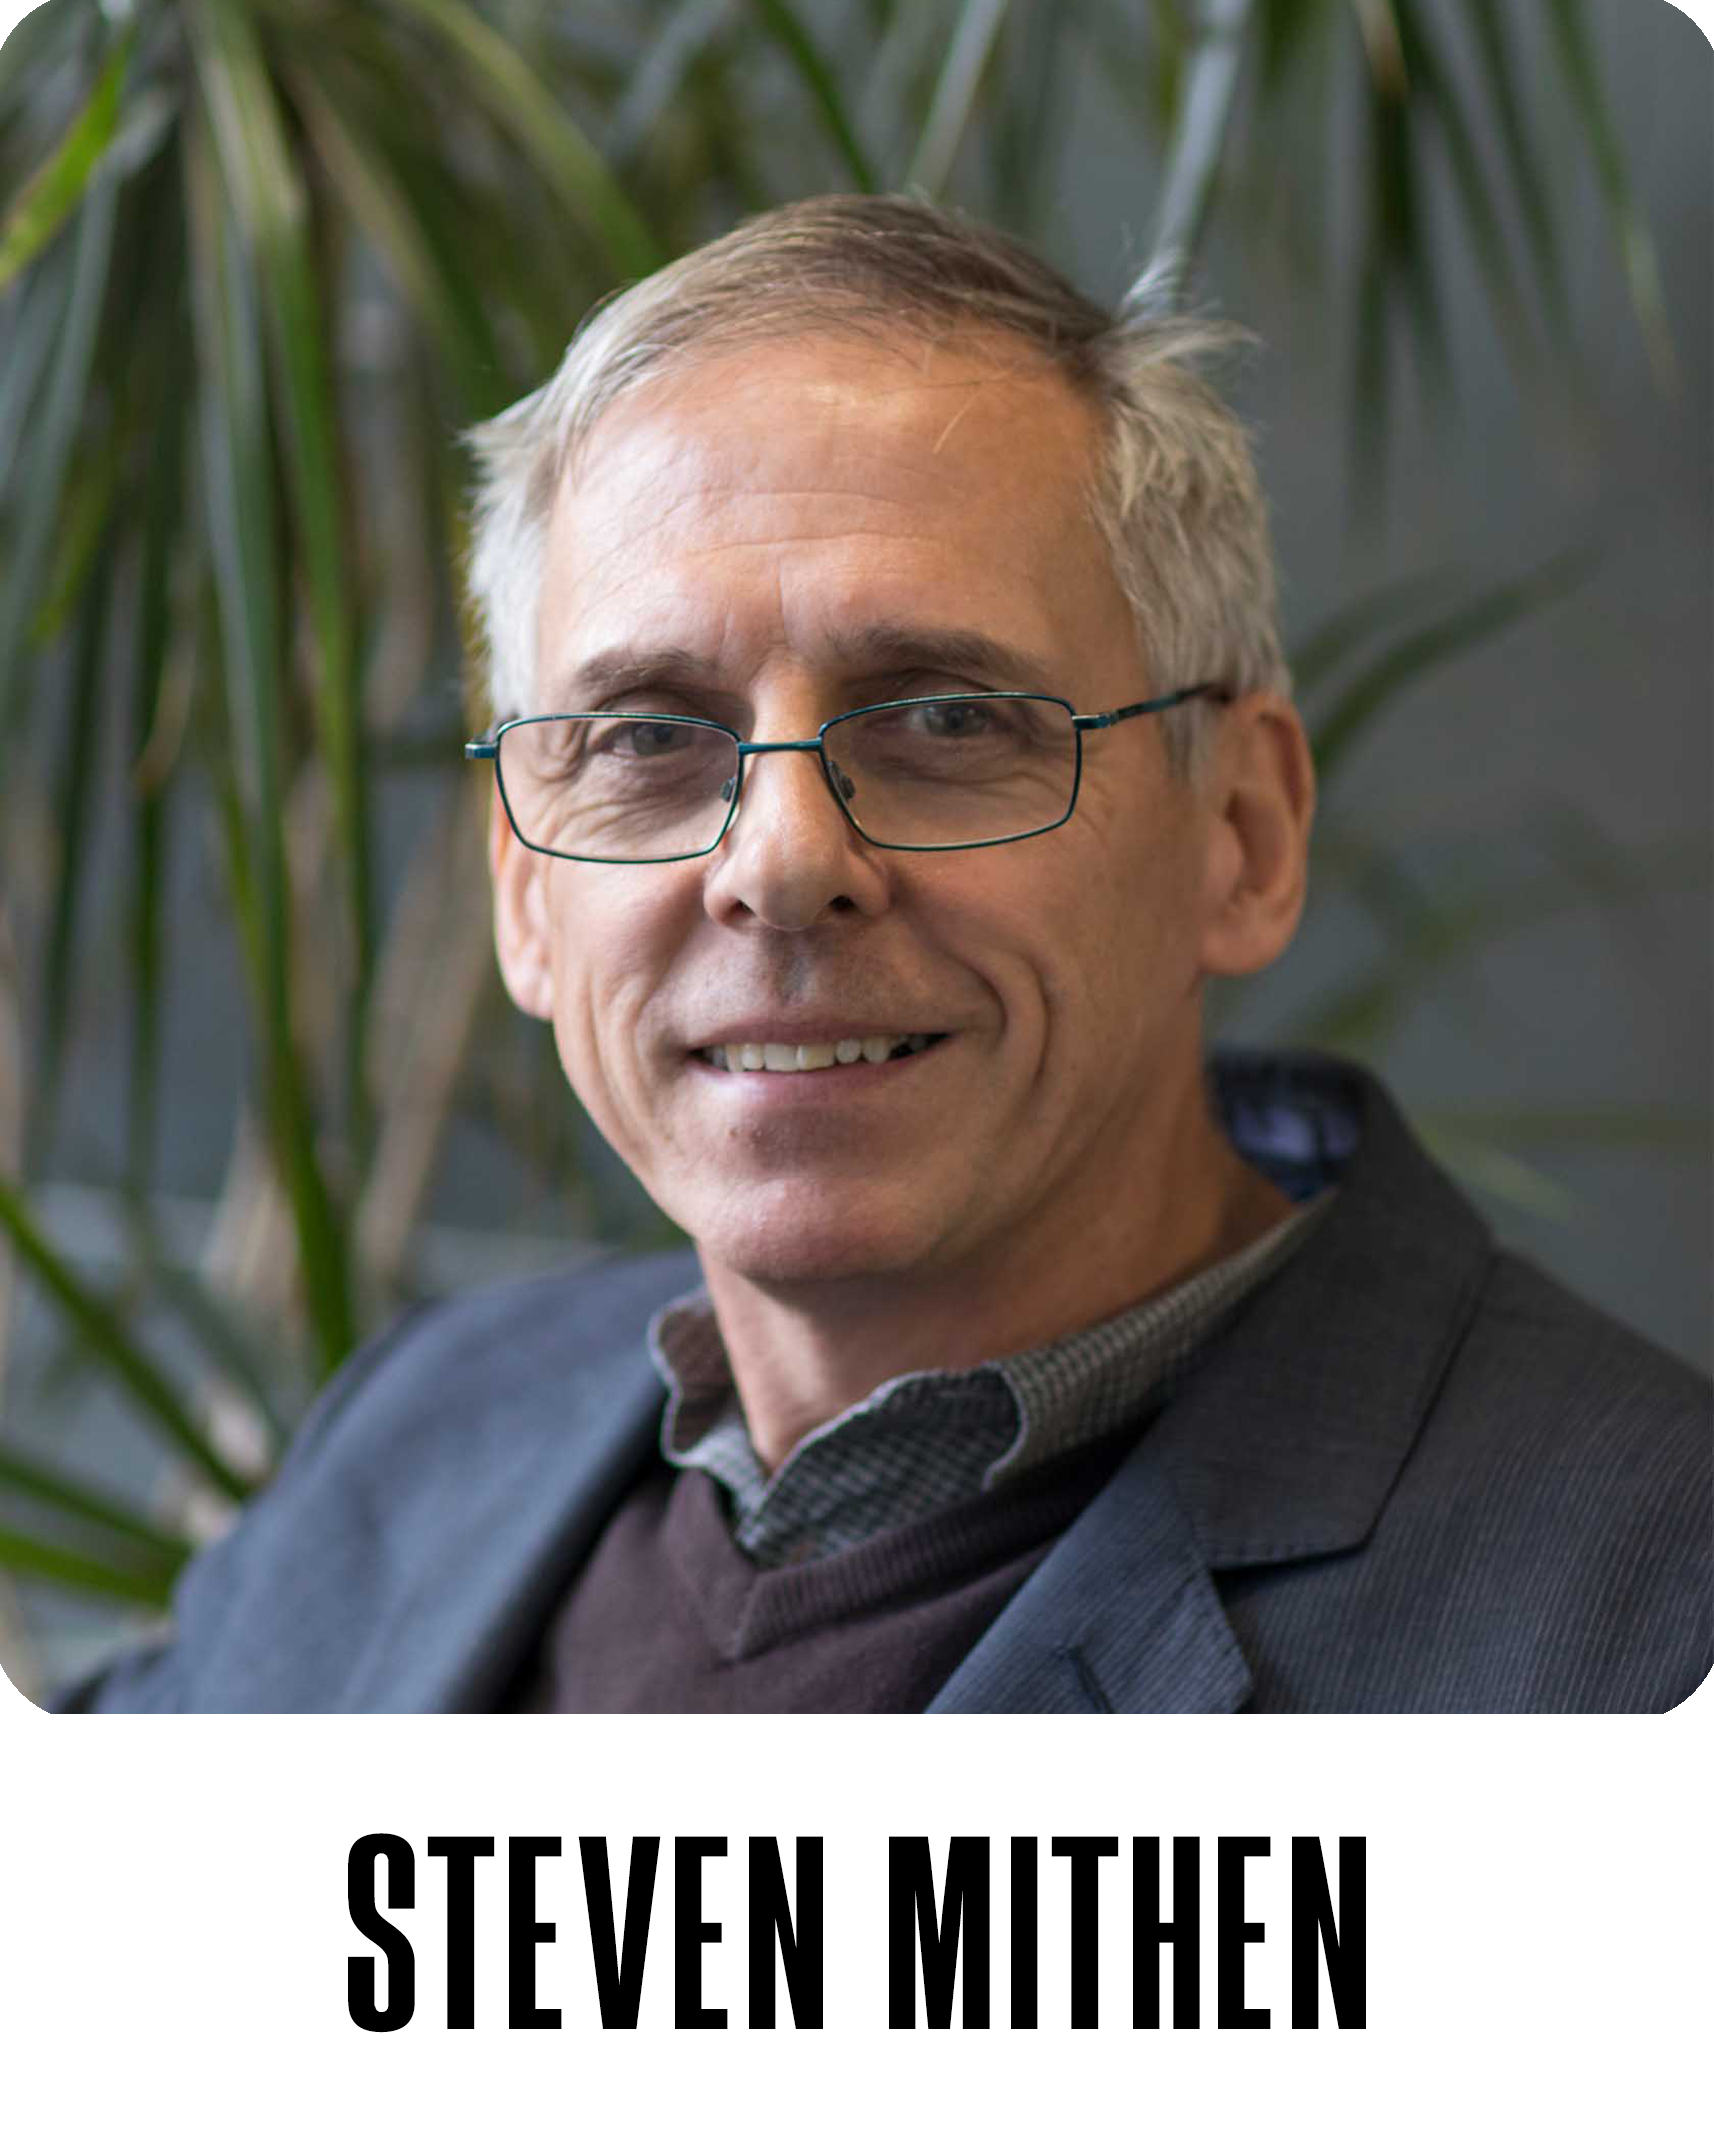 Steve Mithen